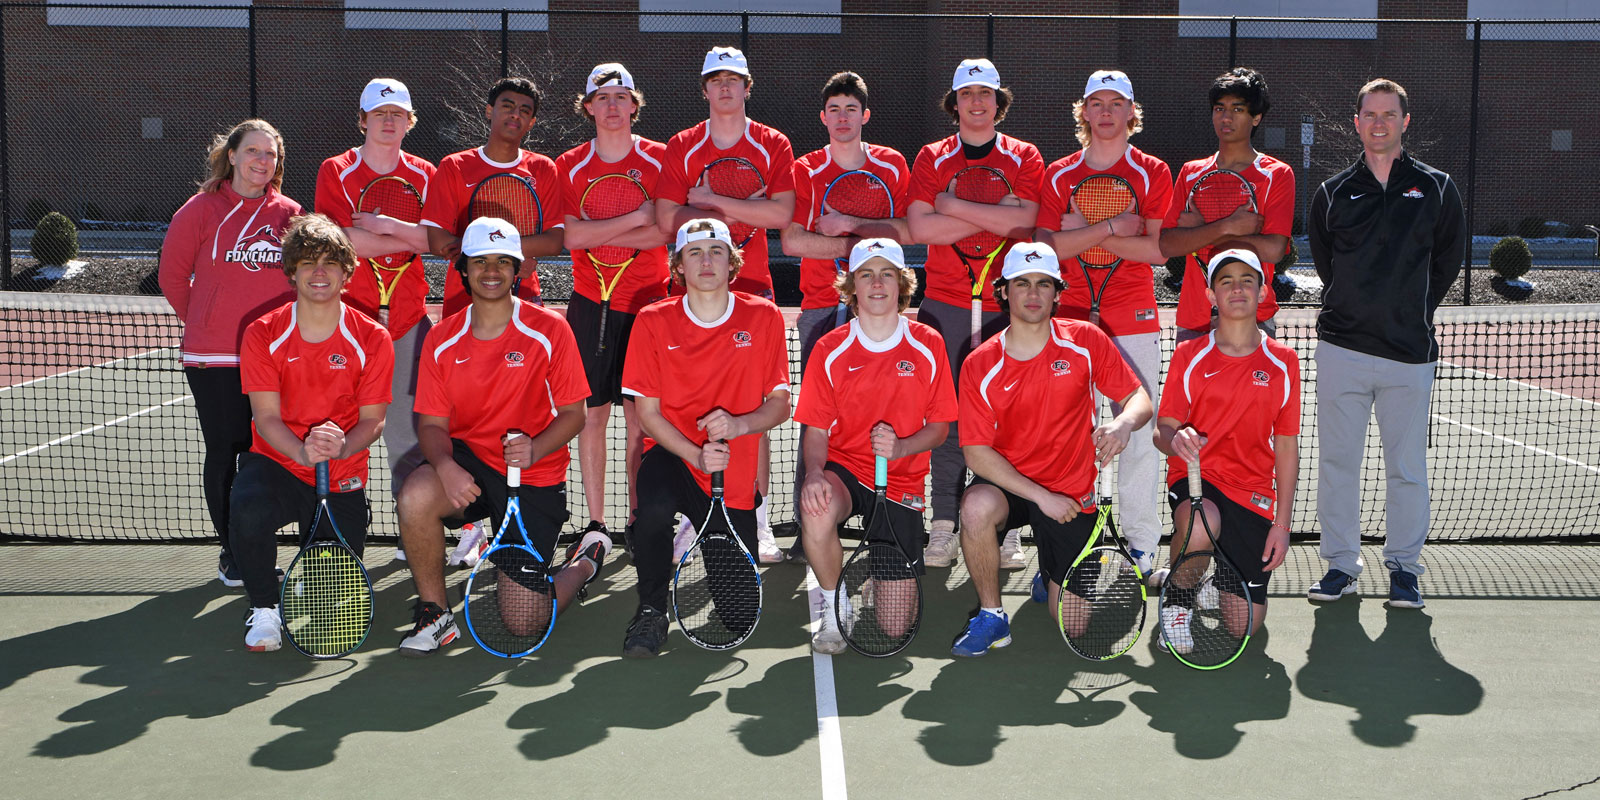 Boys' tennis team